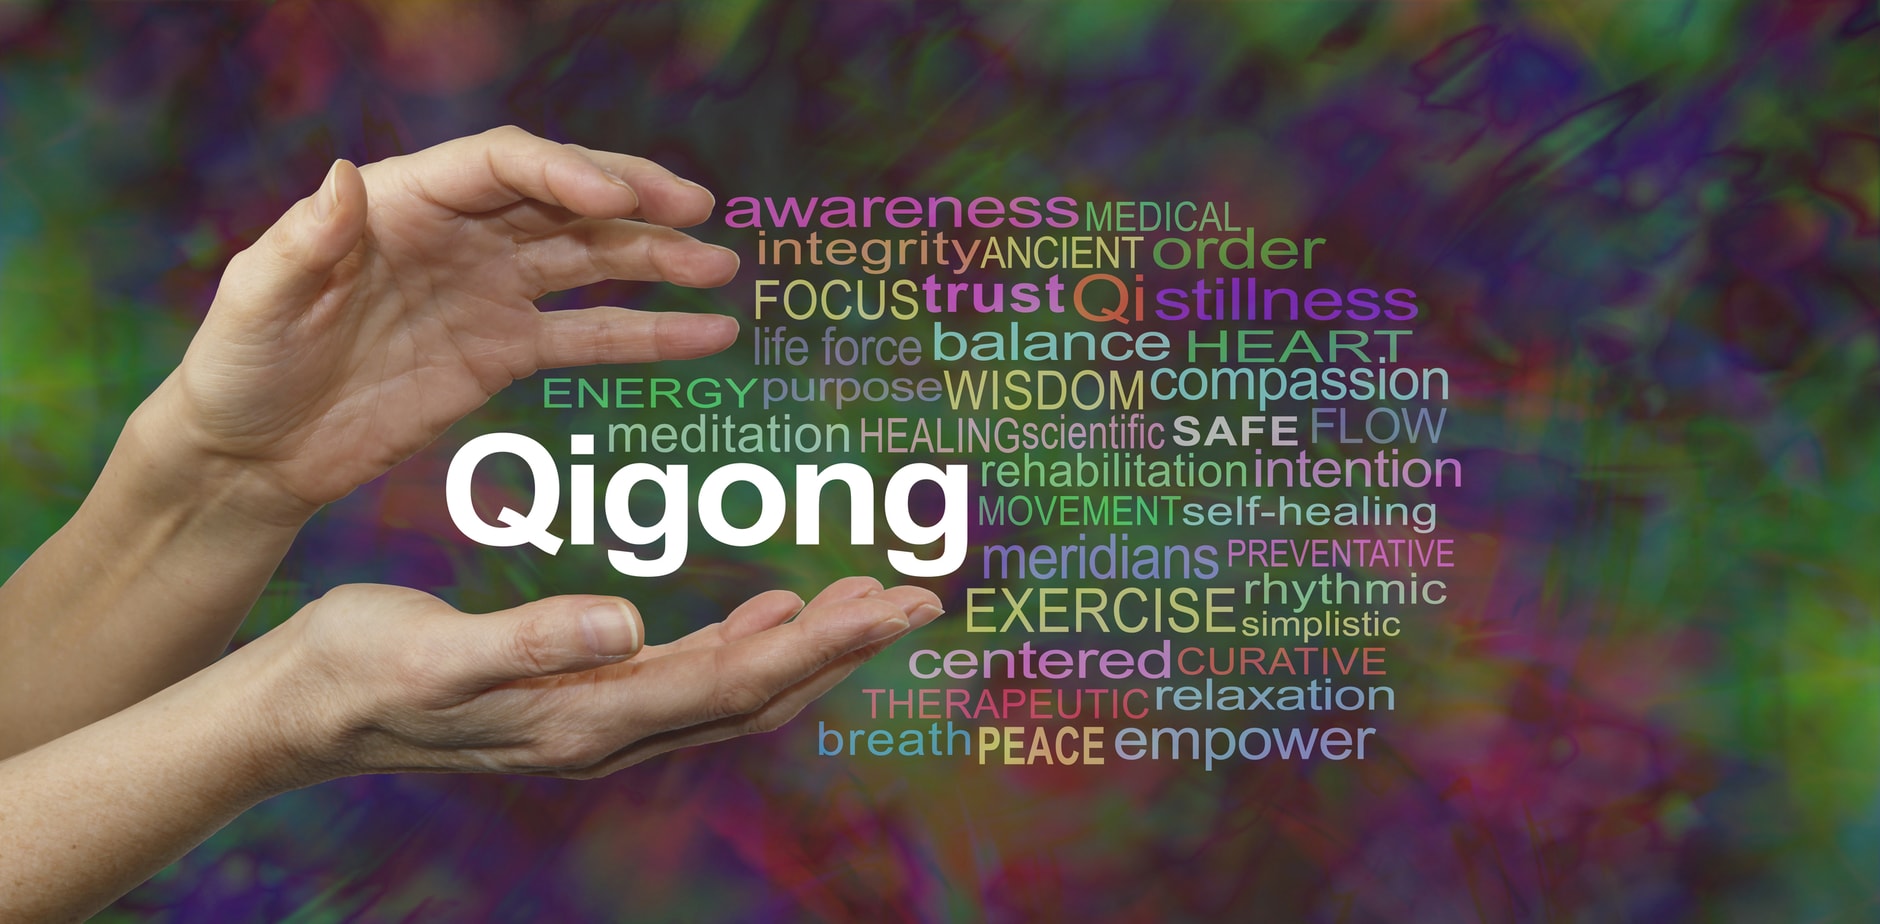 Benefits of Qigong